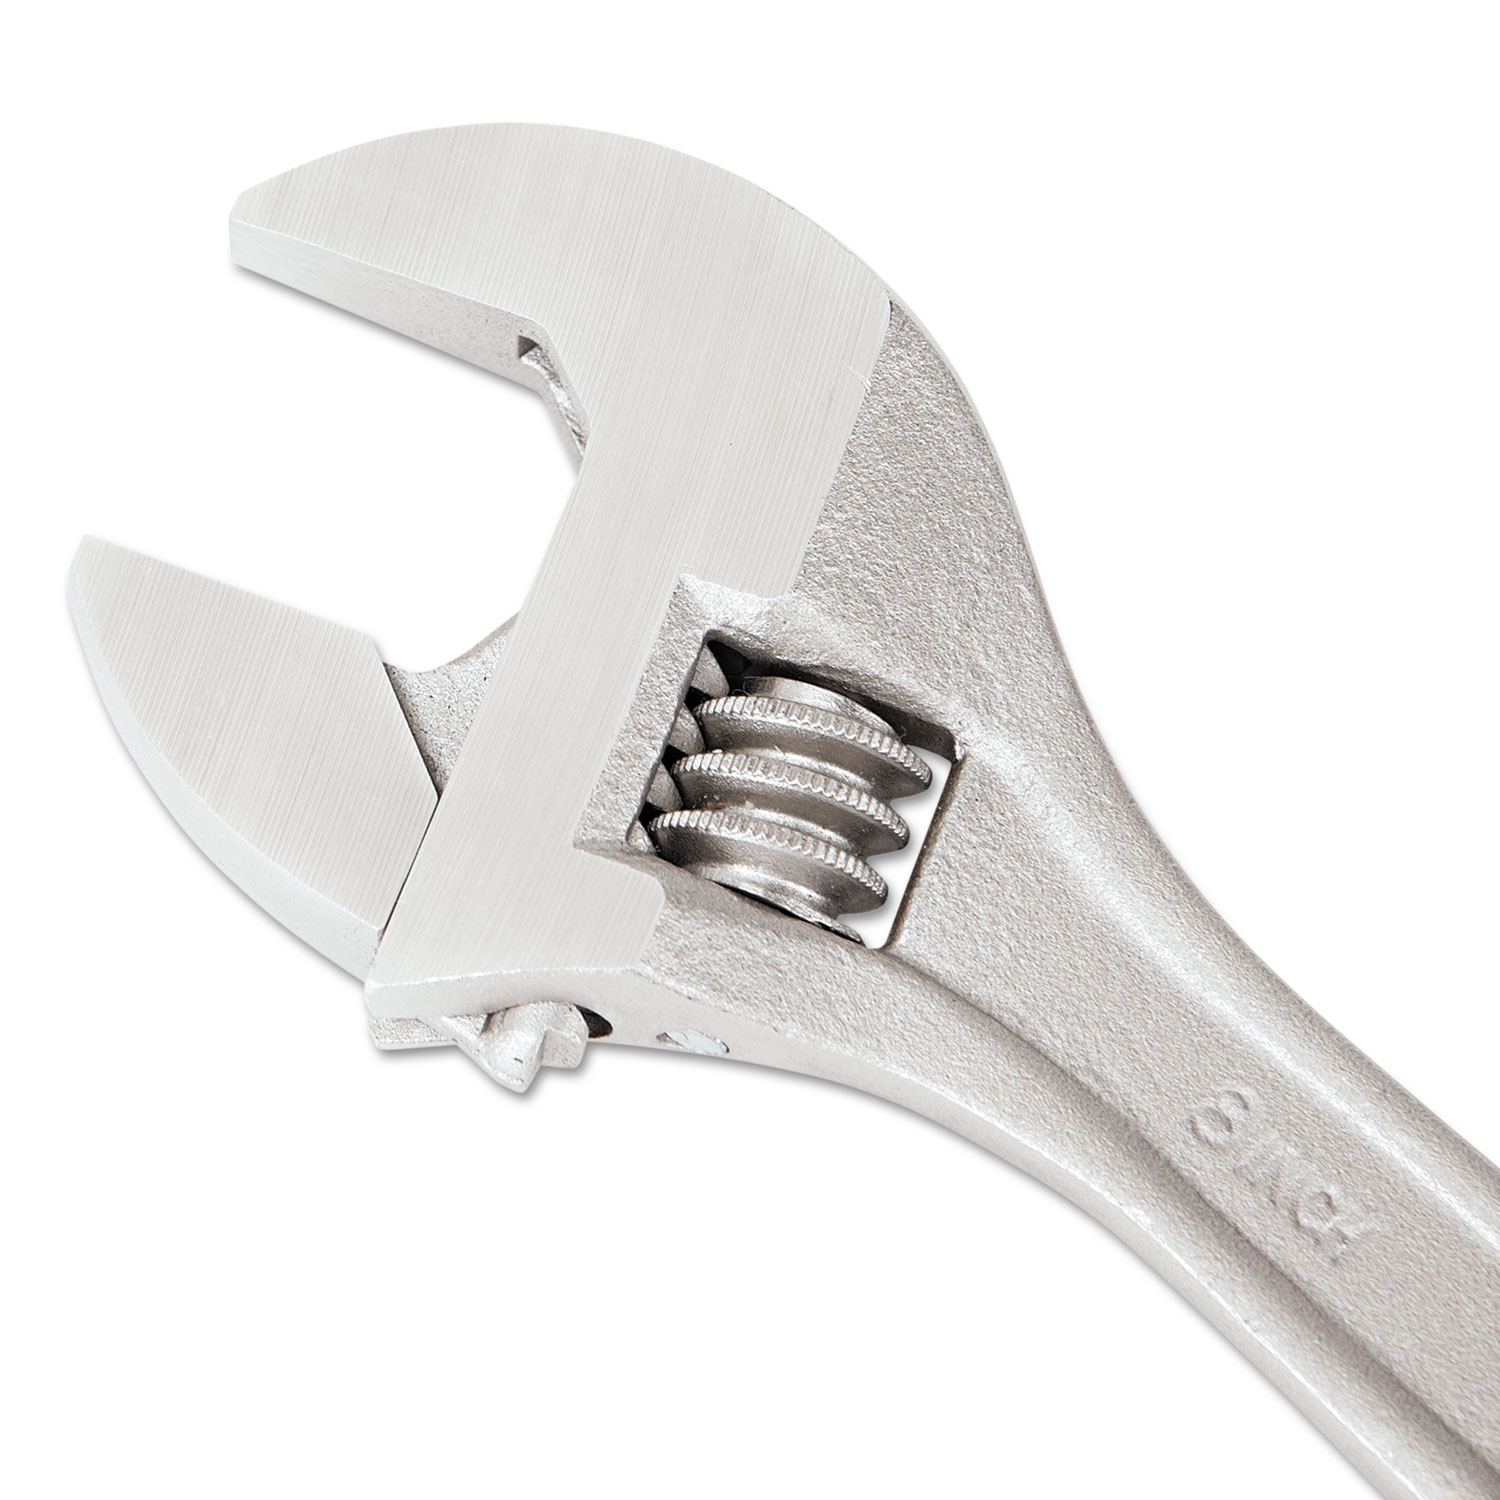 PROTO Adjustable Wrench, 8 Long, 1 1/8 Opening, Satin Chrome